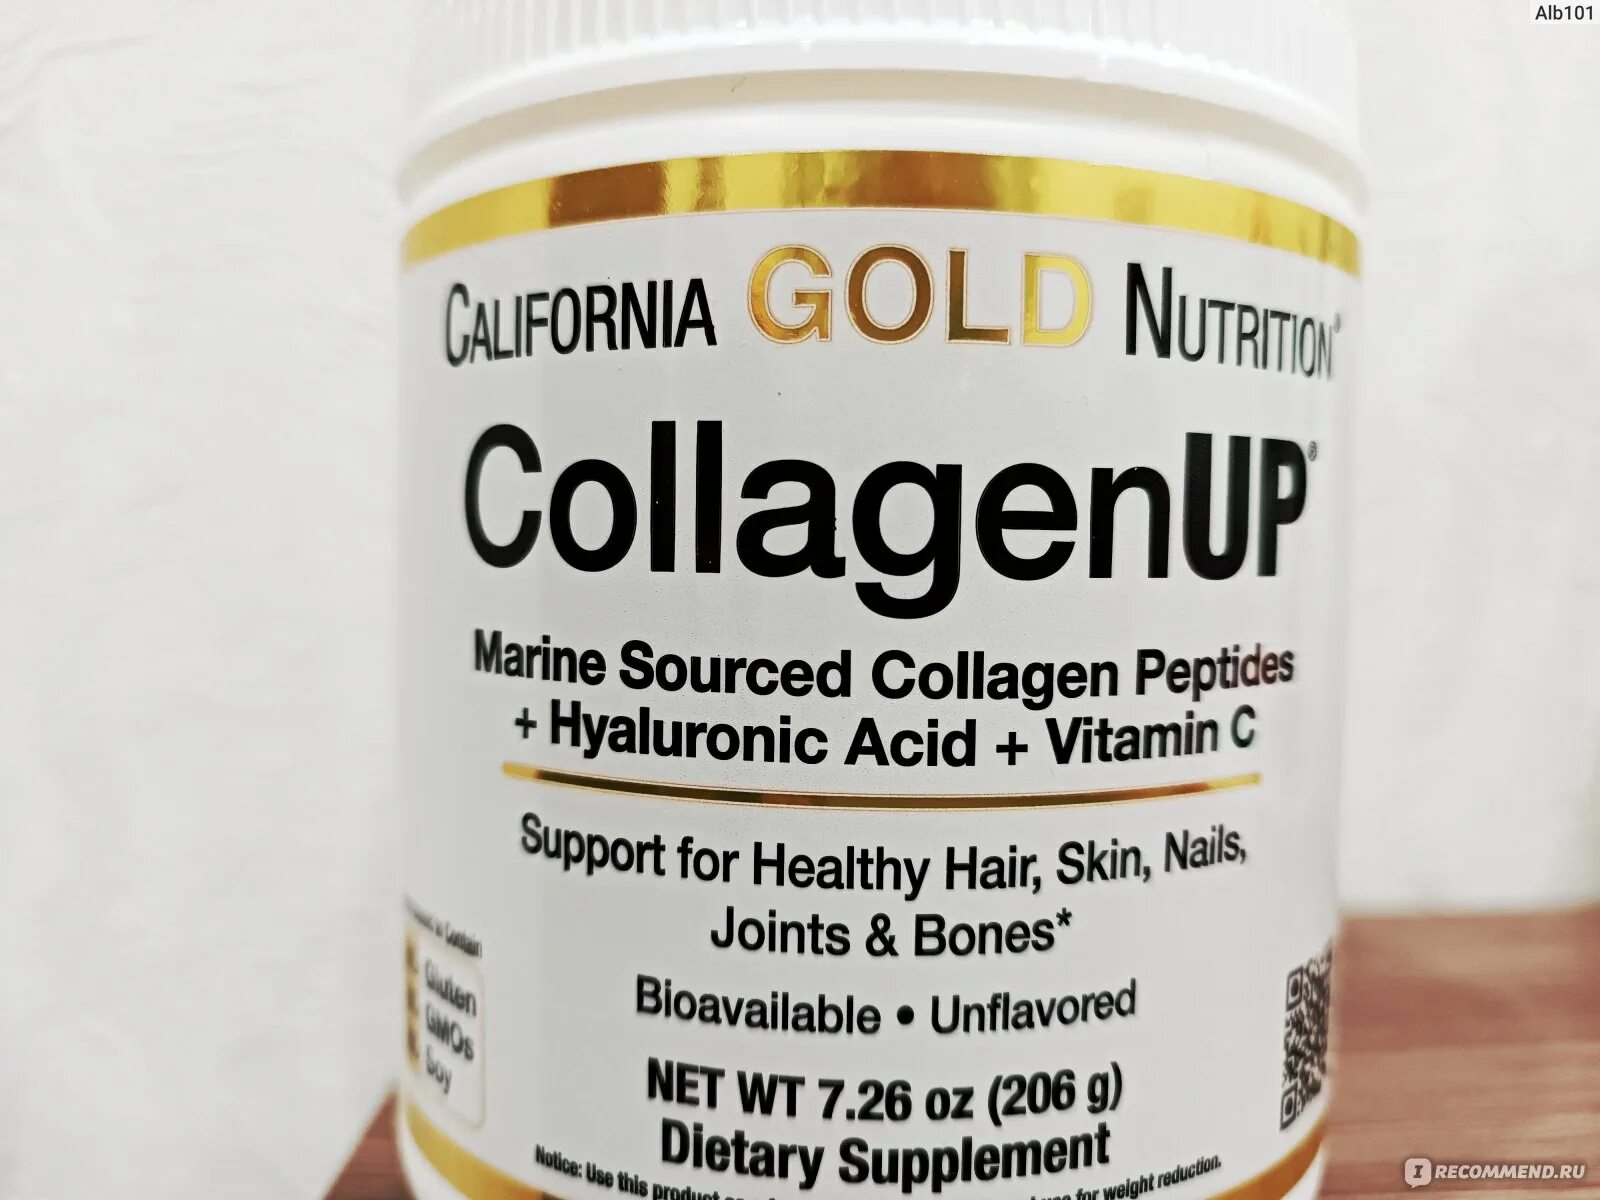 Коллаген Калифорния Голд. Гидролизат коллагена California. Коллаген для приема внутрь. Коллаген California Gold Nutrition как принимать.